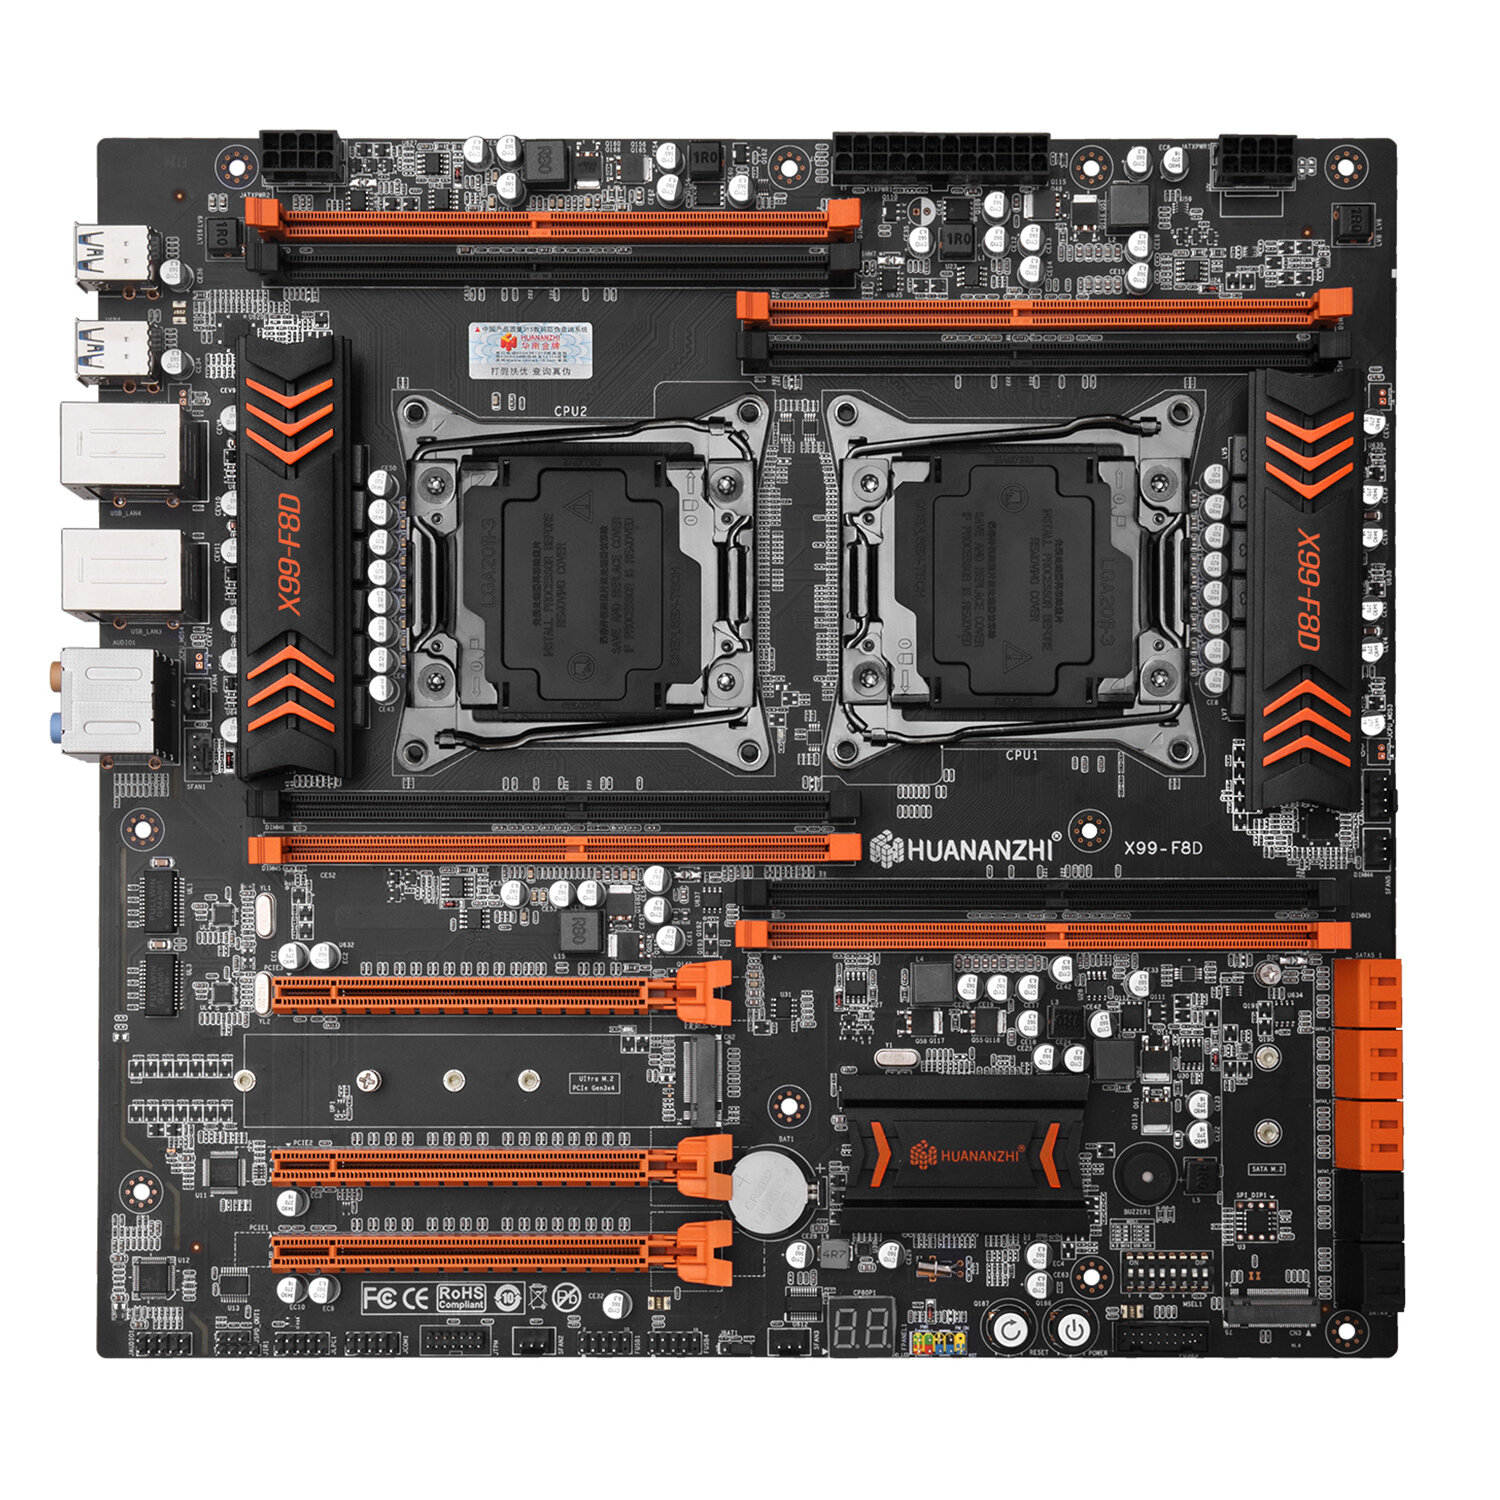 

HUANANZHI X99DUAL-F8D Motherboard Intel Dual CPU X99 LGA 2011-3 E5 V3 DDR4 RECC 256GB M.2 NVME NGFF USB3.0 E-ATX Server